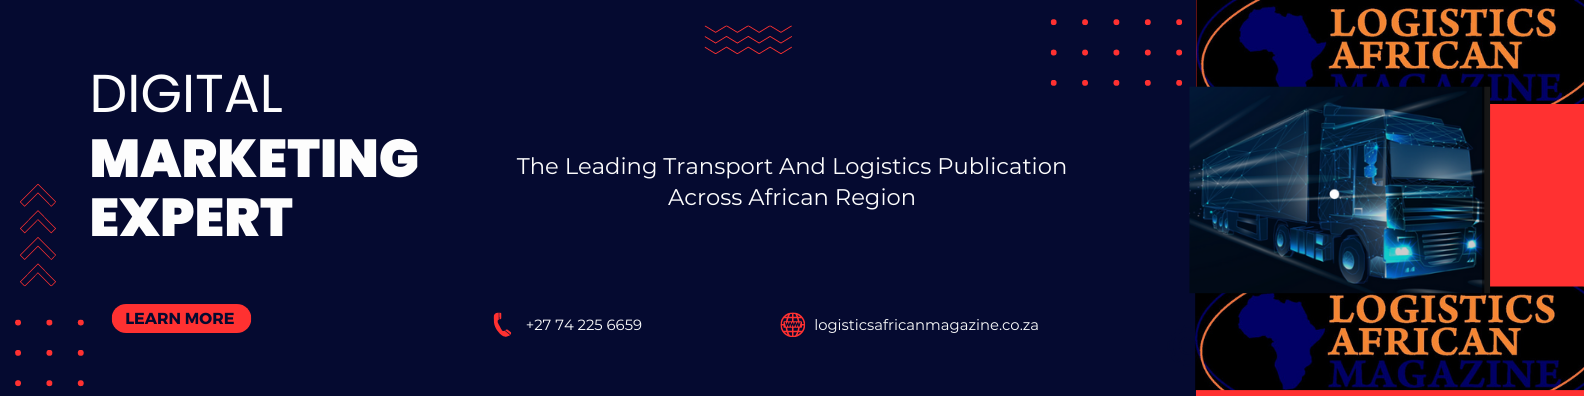 Logistics African Magazine